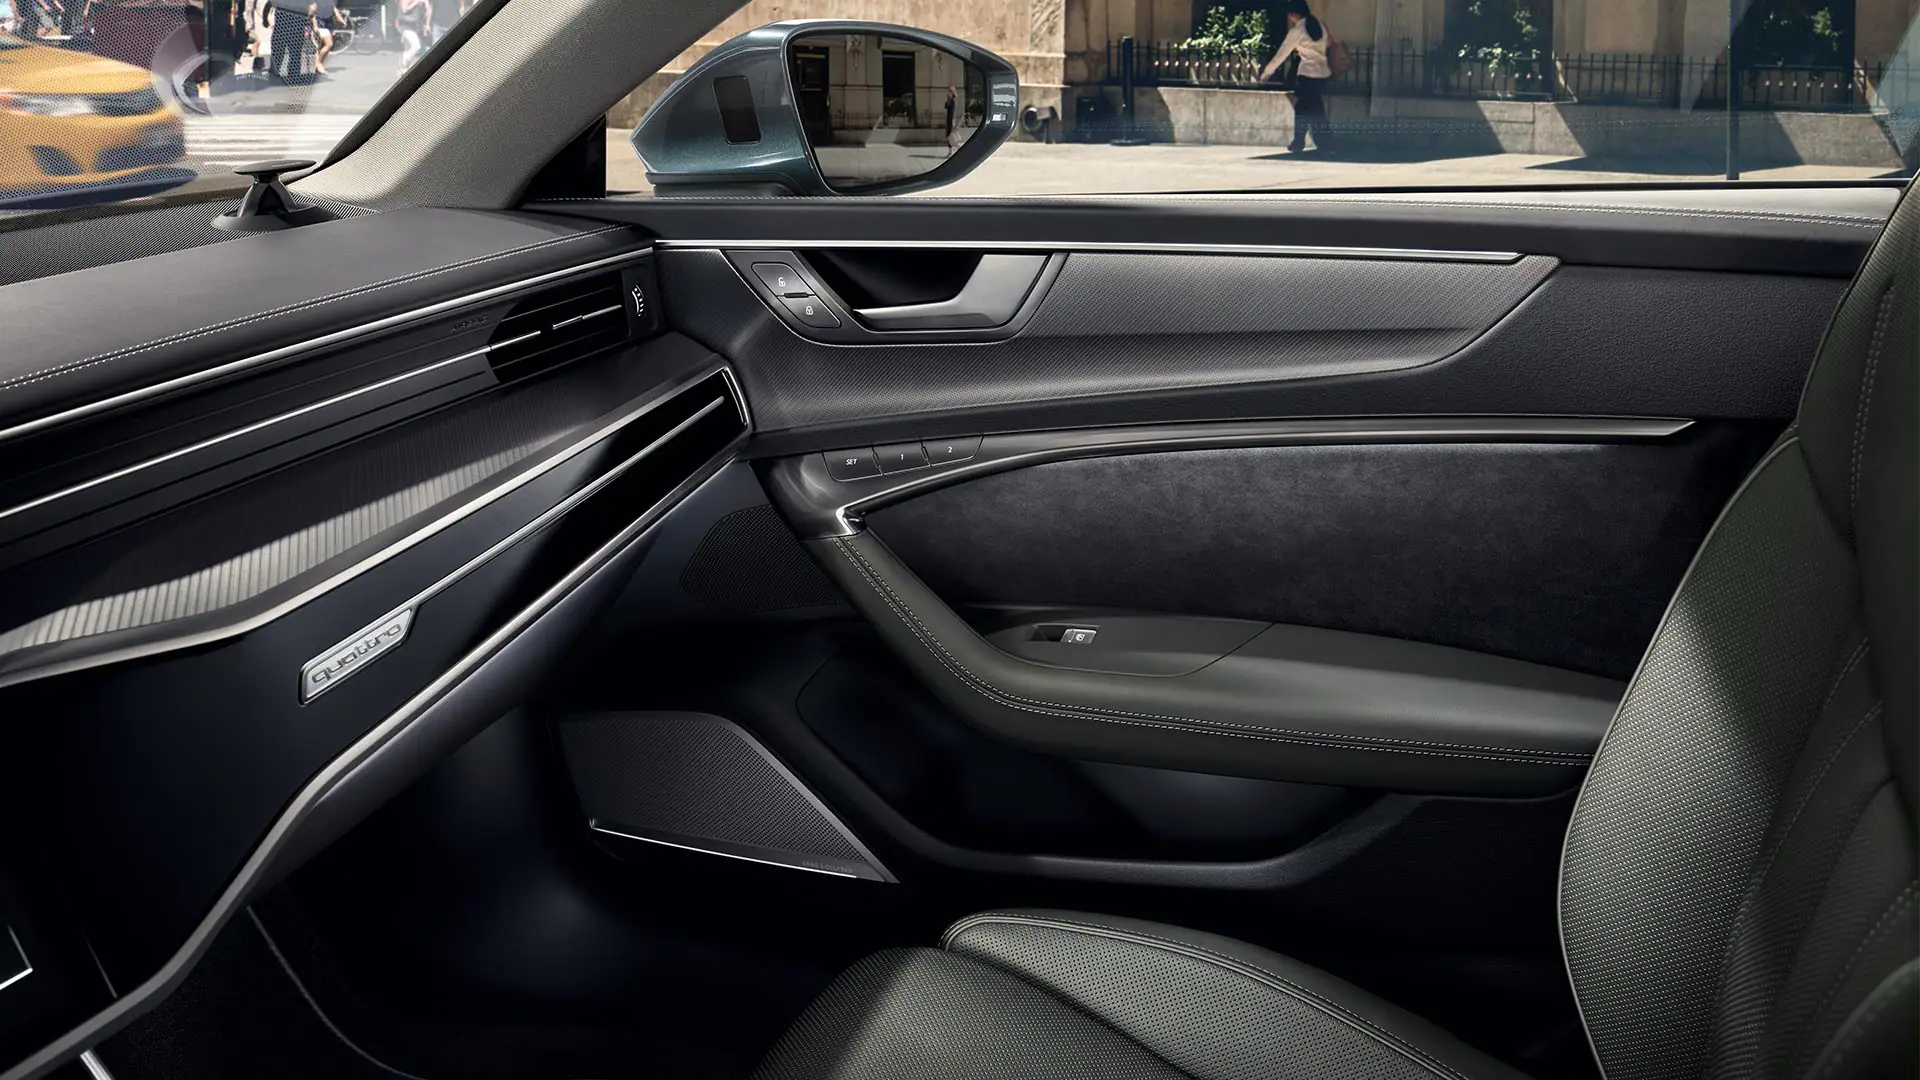 Audi A7 Sportback passenger interior